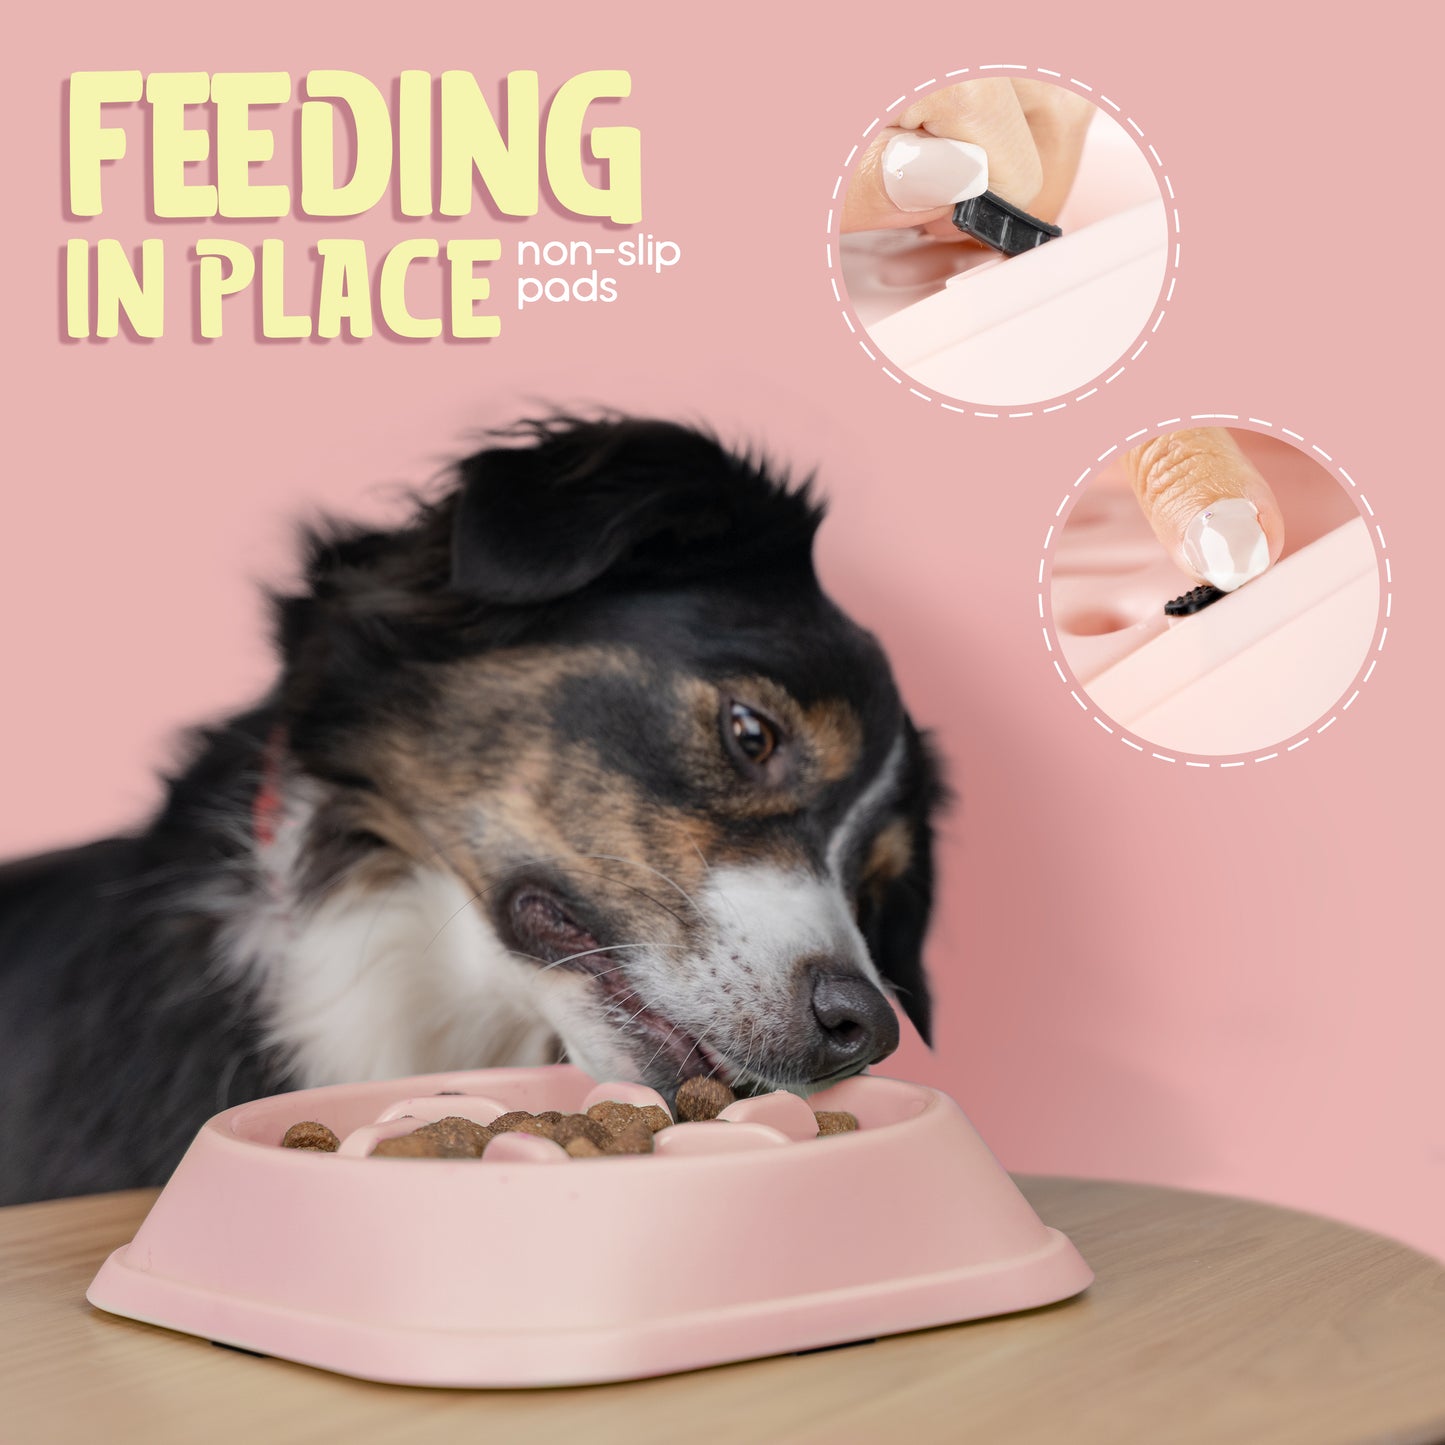 Purrfects Slow Feeder Dog Bowl (Blush Pink)